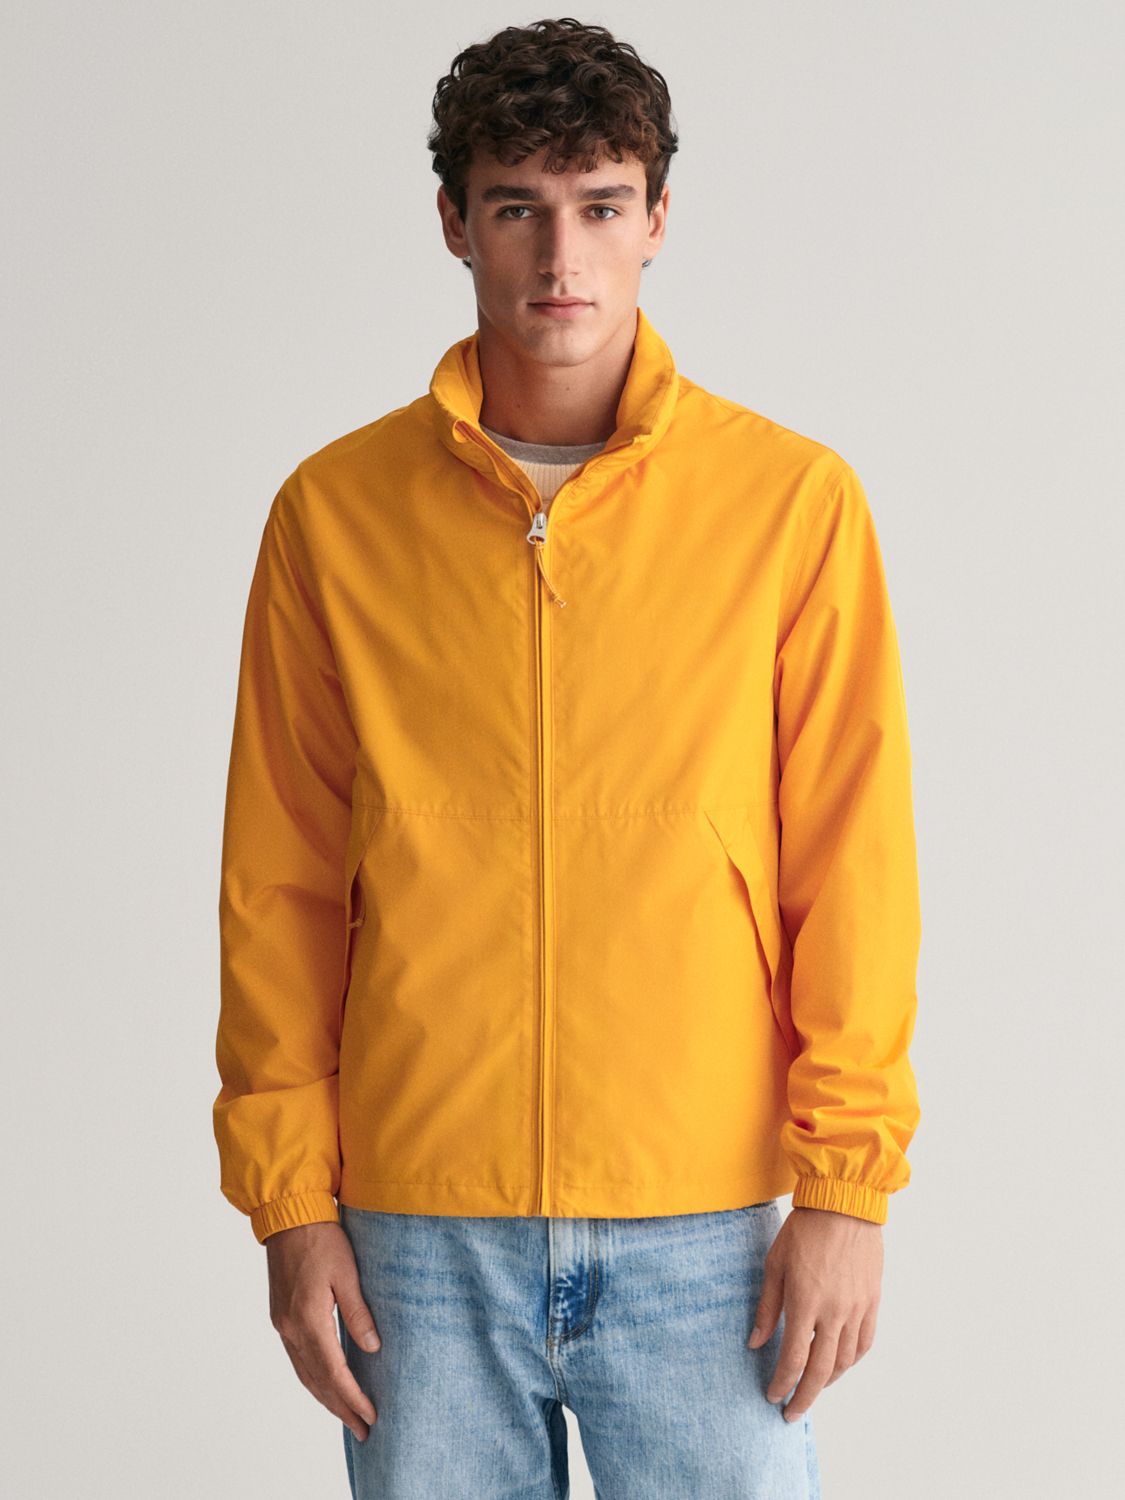 GANT Lightweight Windshield Jacket, Yellow, M